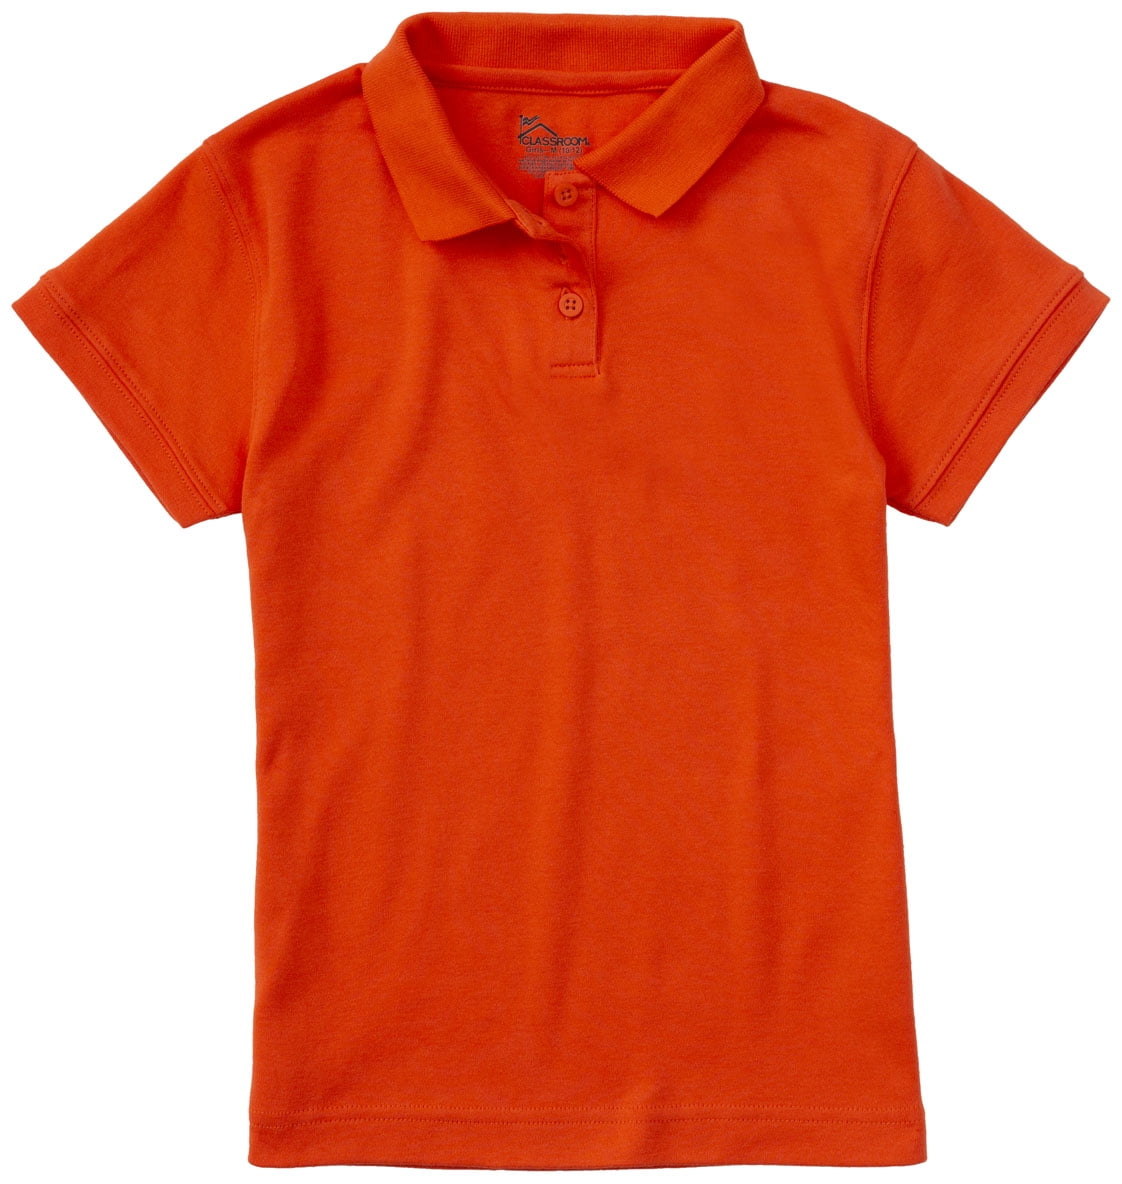 RED Boys Girls Kids School Polo Shirt T-Shirt Uniform Sports P.E Casual POS 